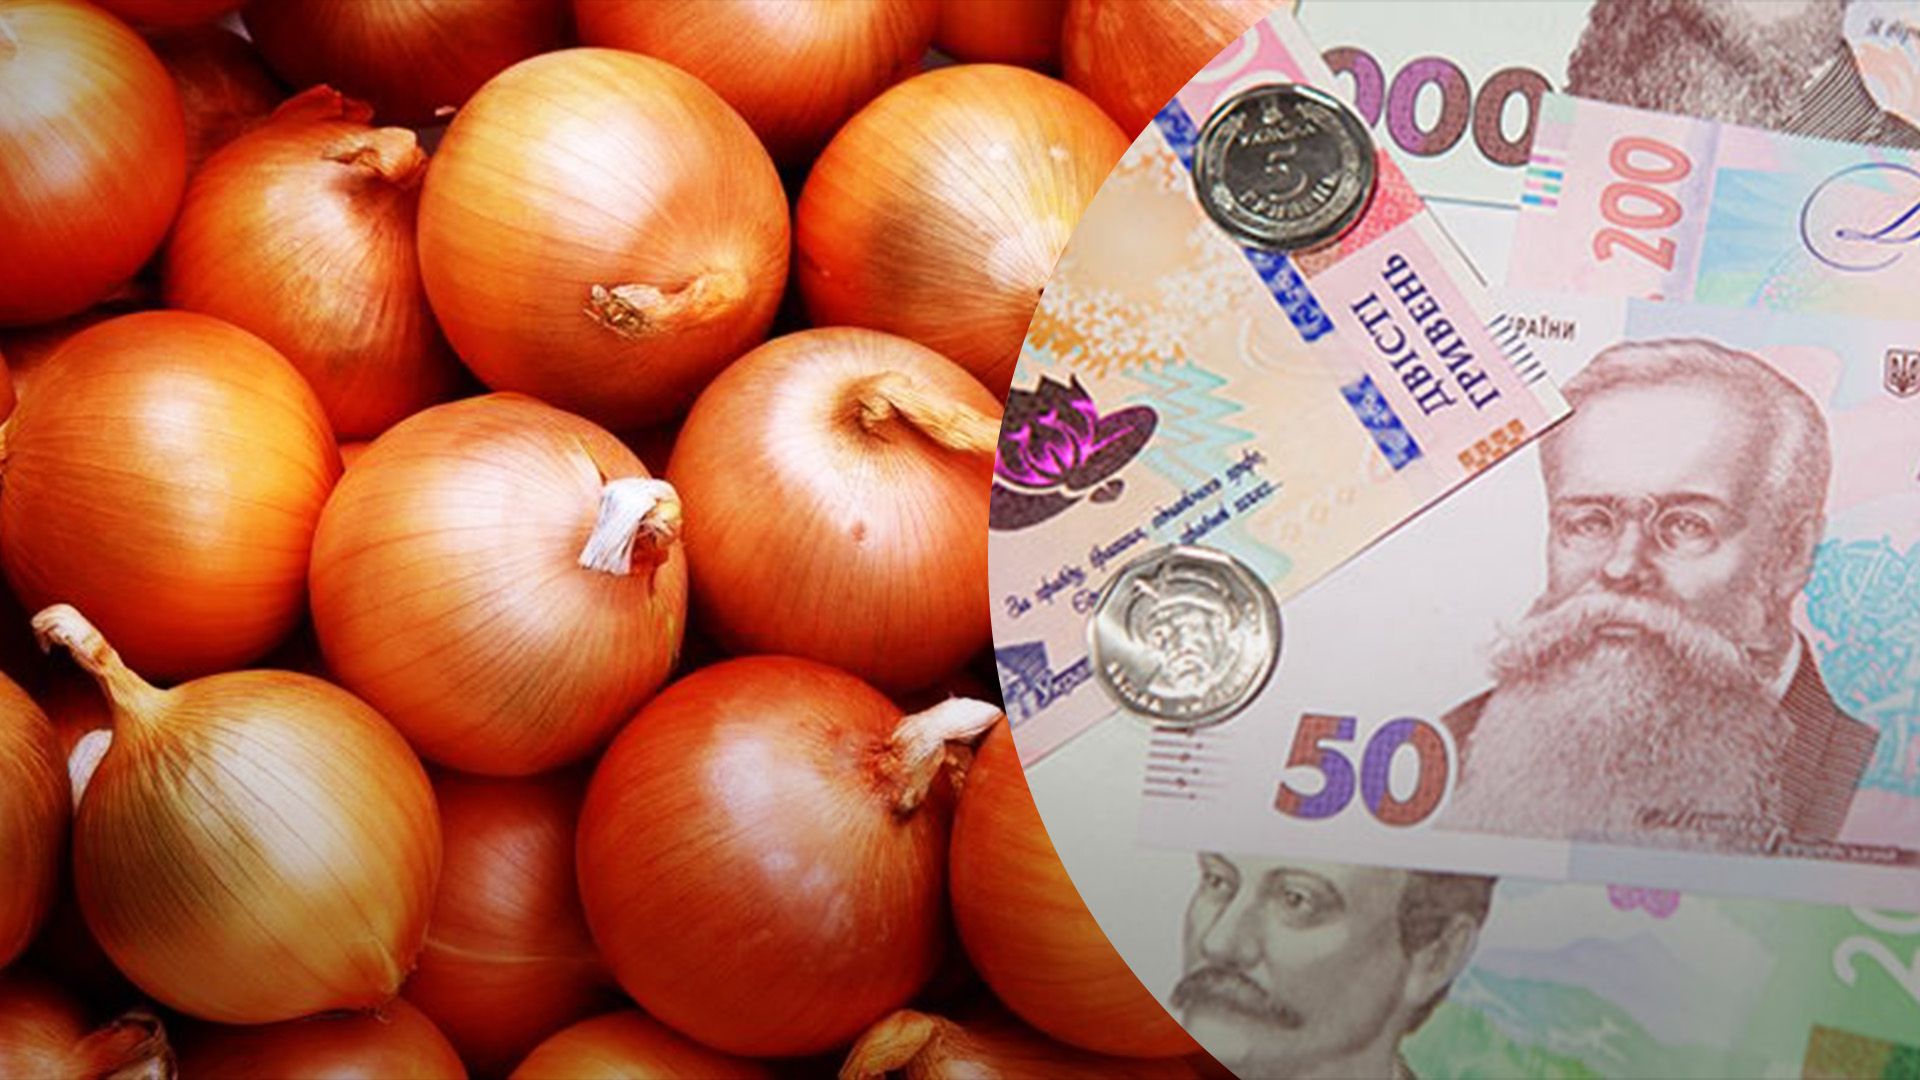 Цены на лук в Украине обвалились в цене на лук в Украине